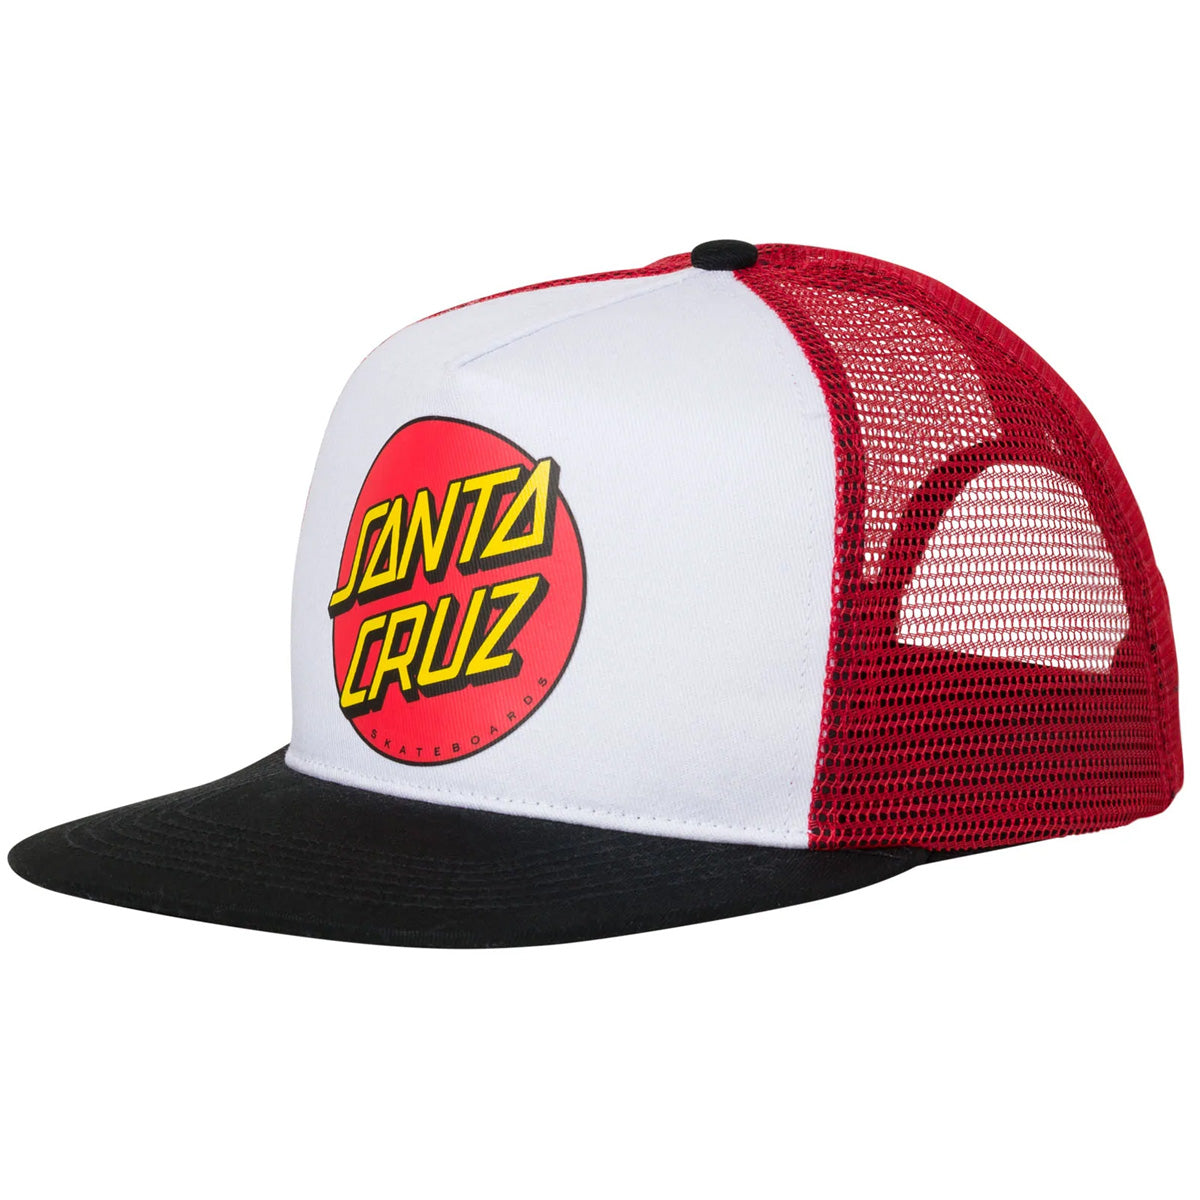 Santa Cruz Classic Dot Mesh Trucker Hat - Red/White/Black image 1